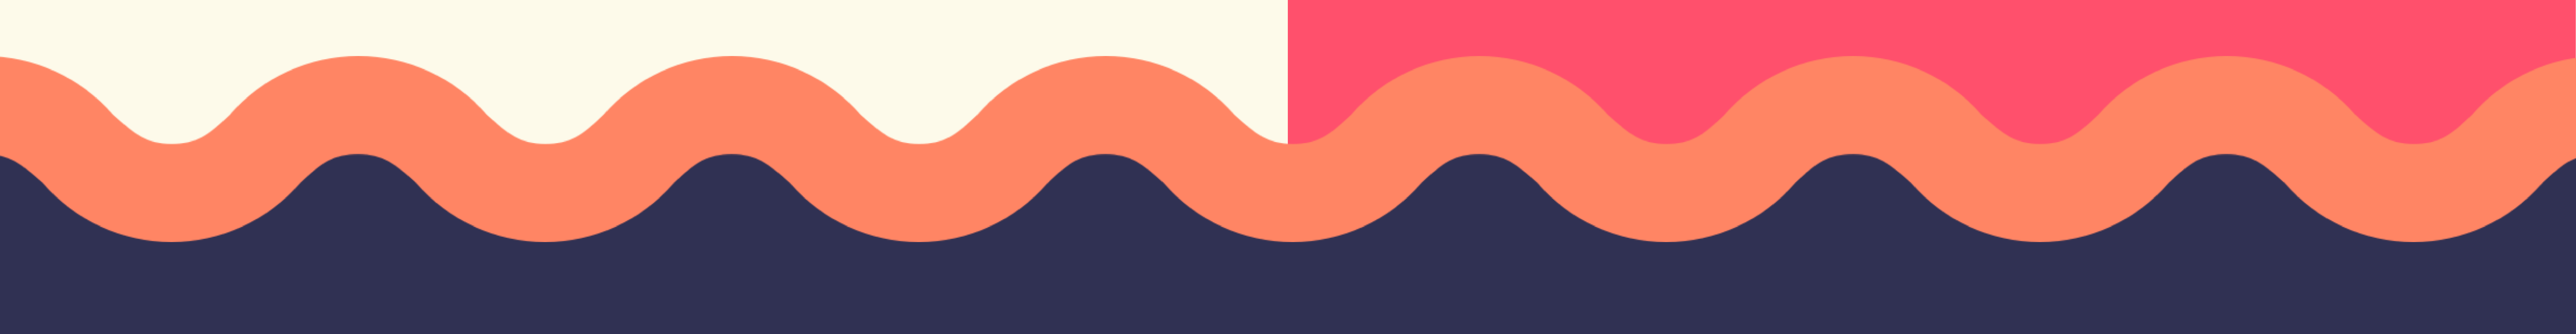 Minderful_orange_wave_inverted_split